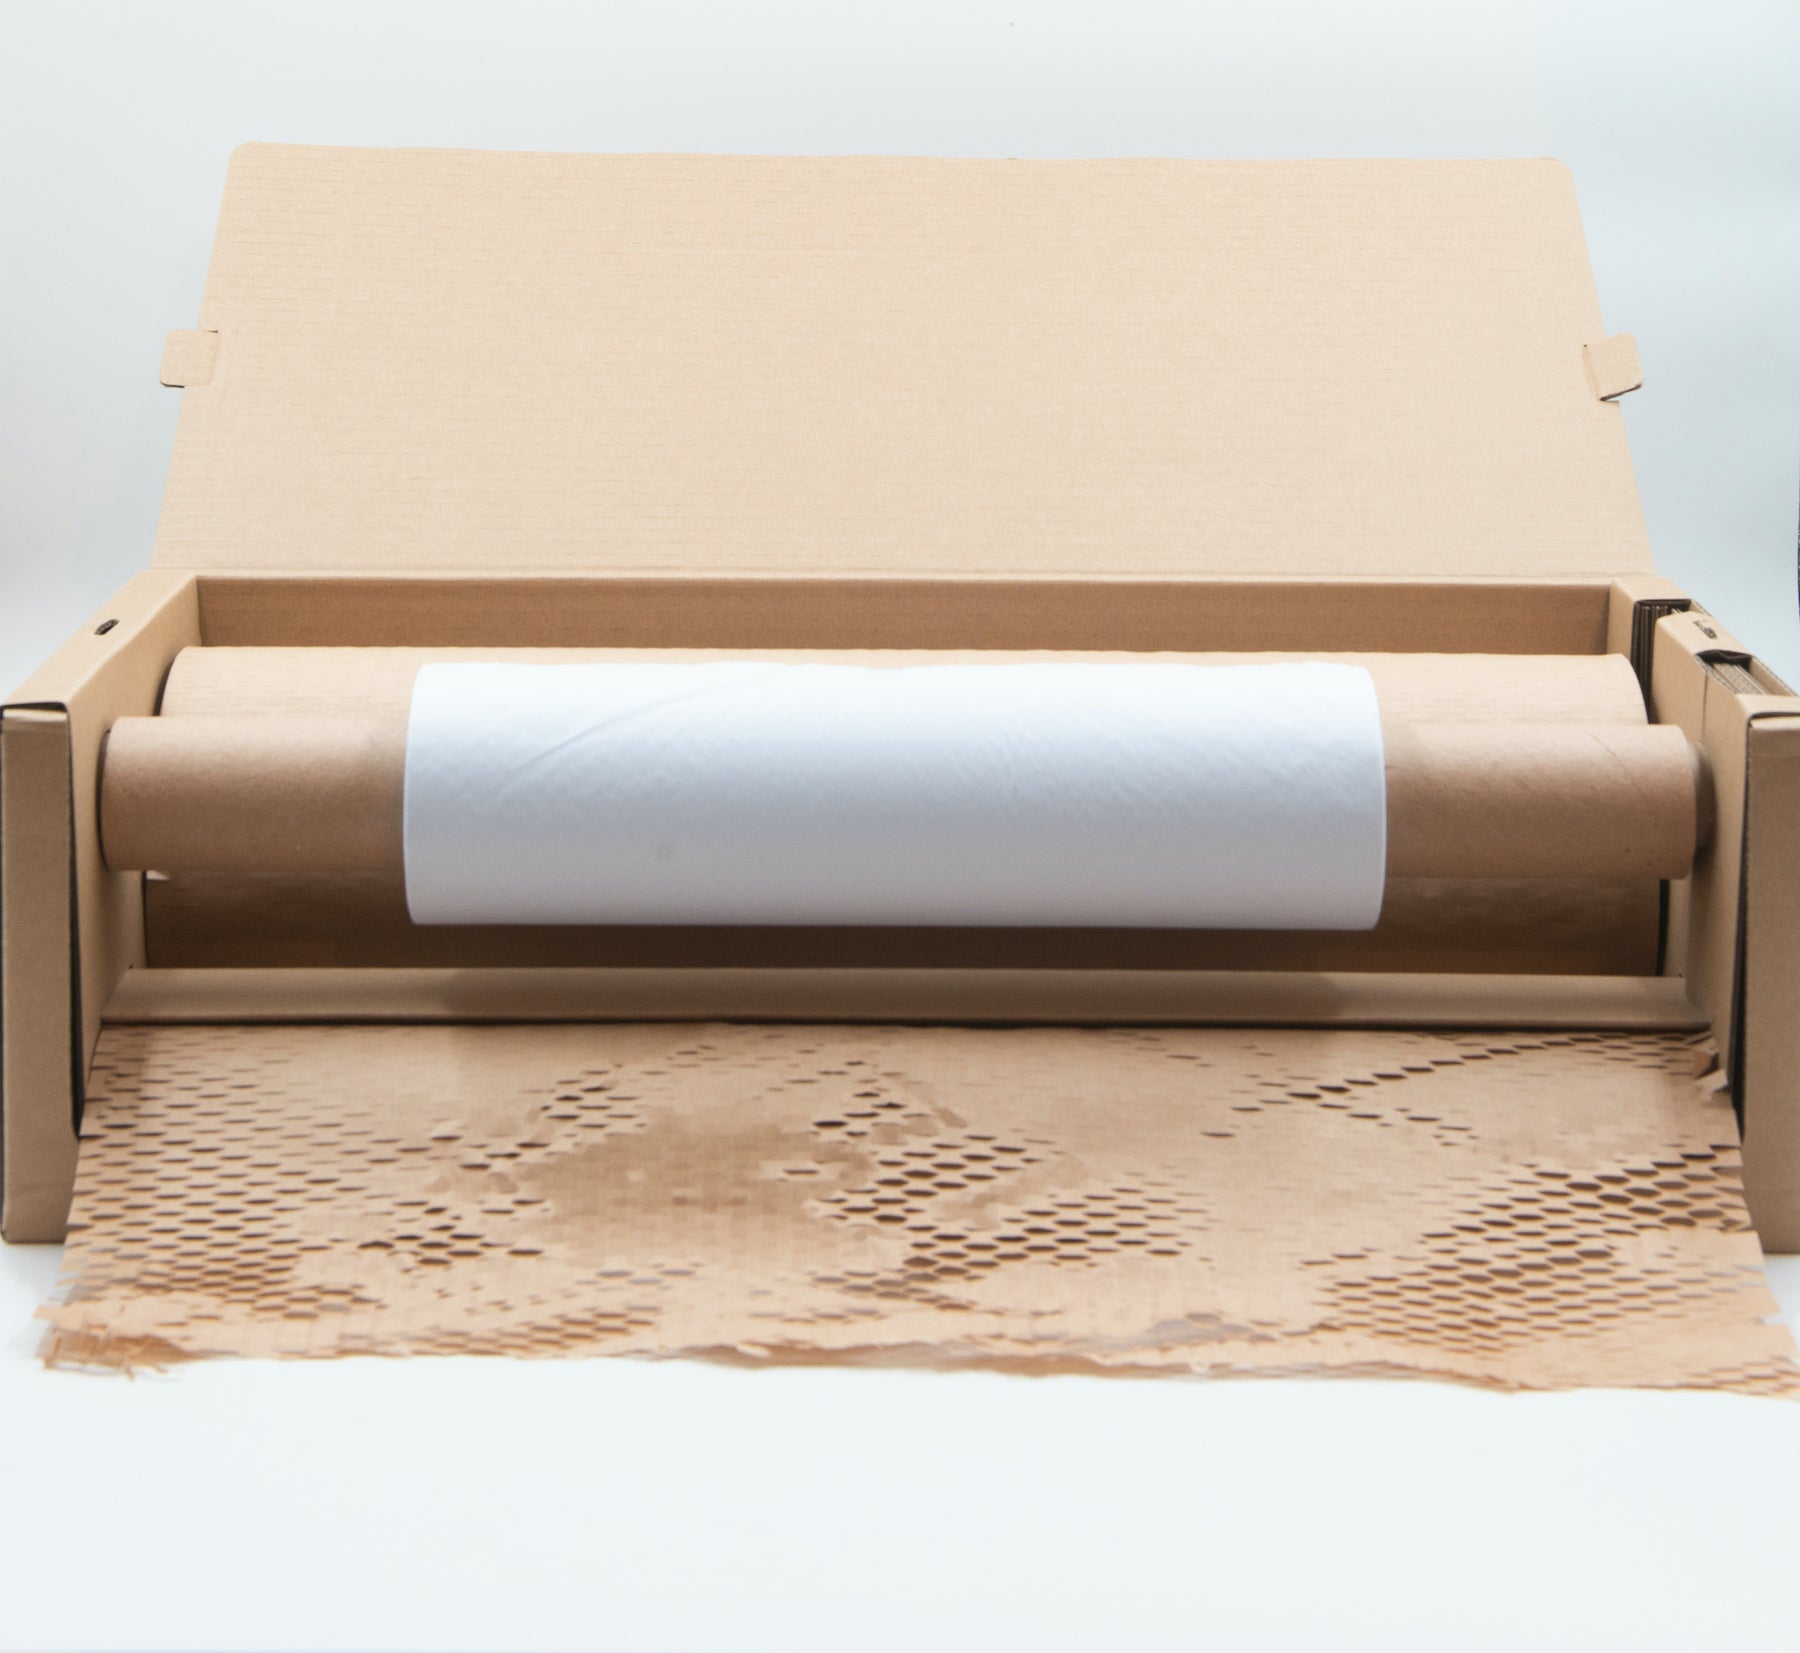 Shop HoneyComb Paper Wrap